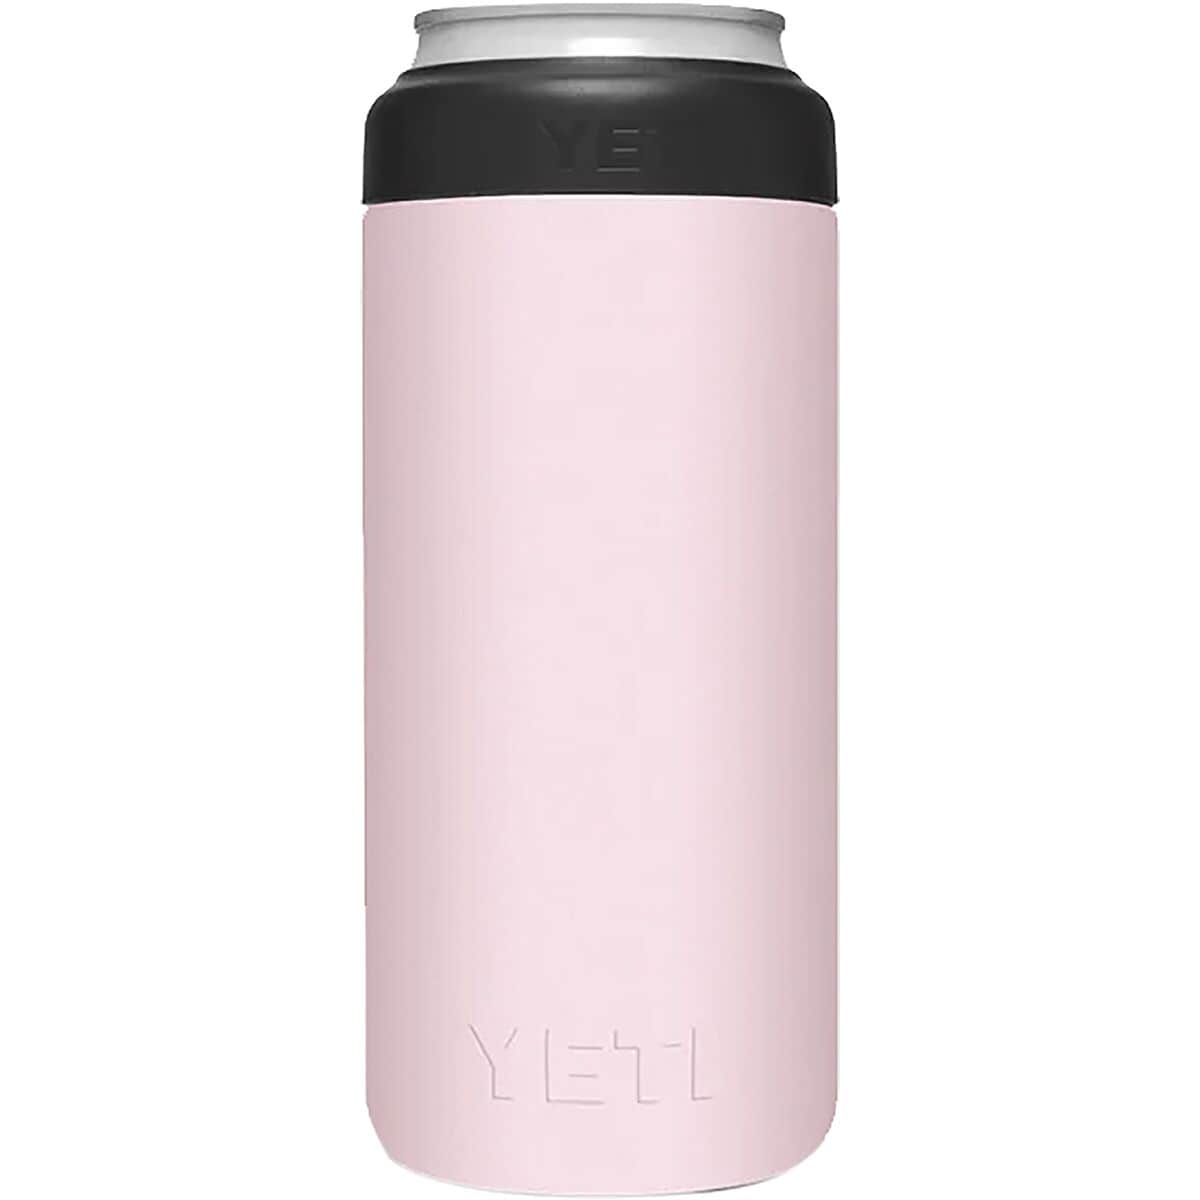 Yeti Rambler 12oz Bottle with Hotshot Cap review: hot coffee